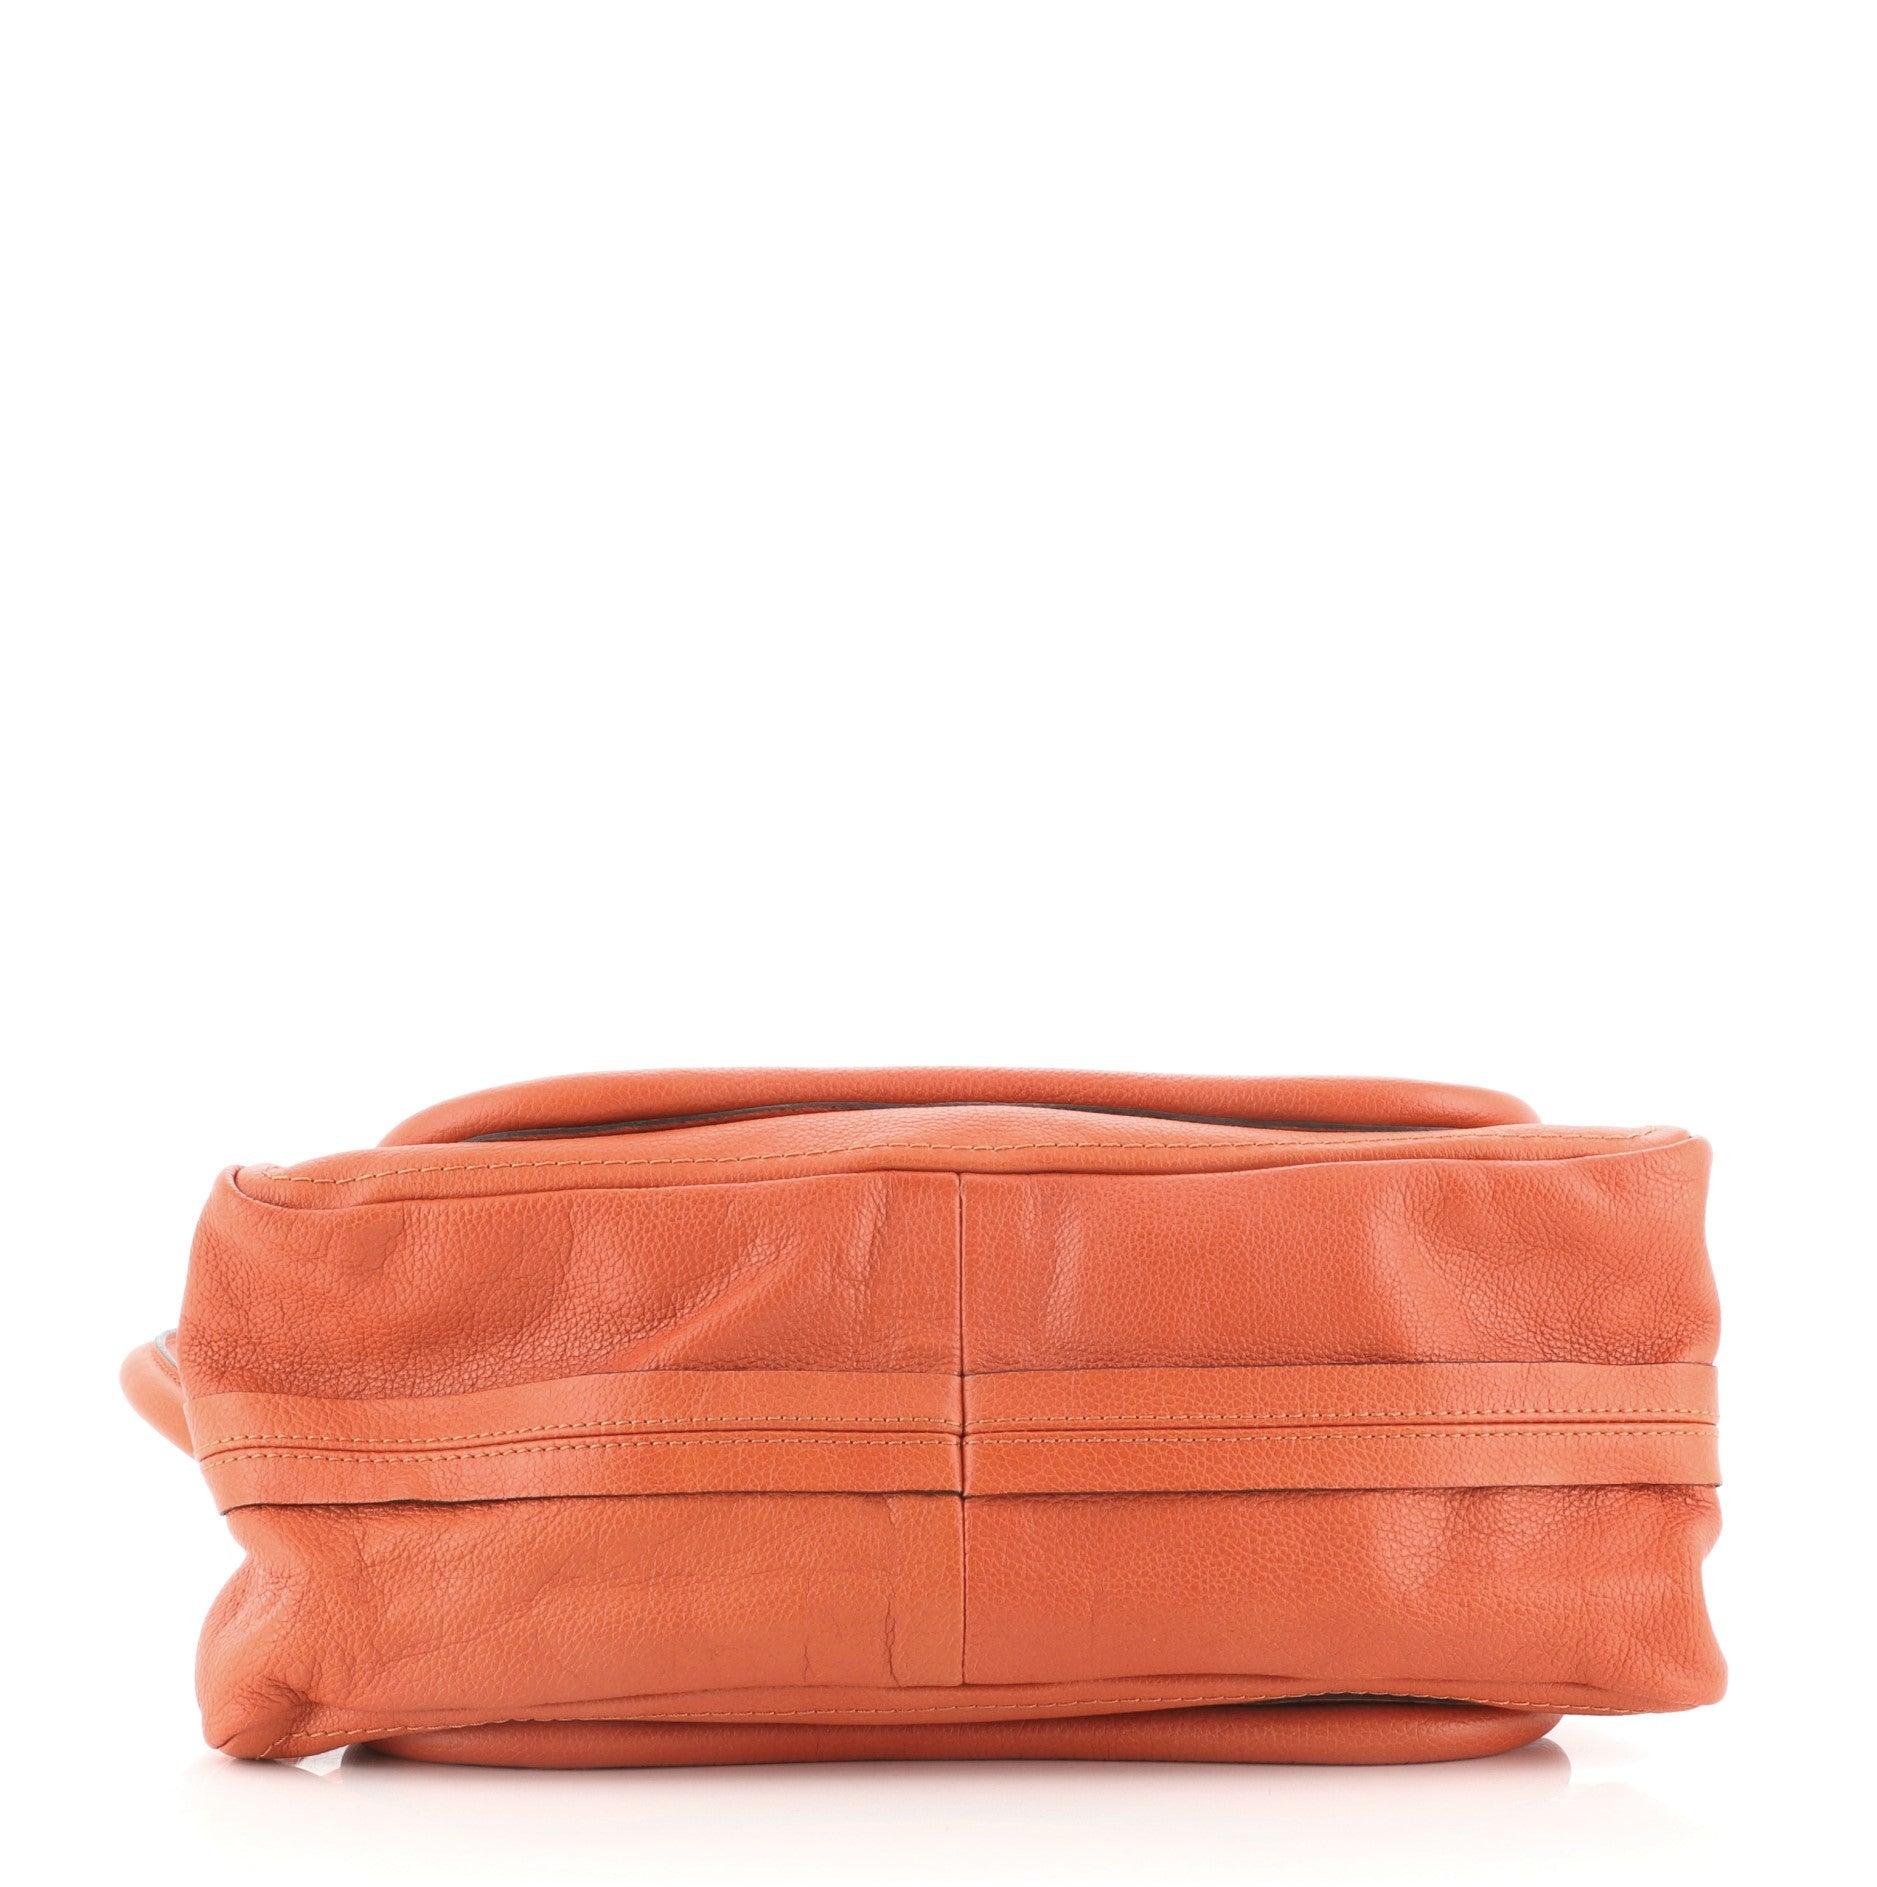 Chloe Paraty Top Handle Bag Leather Medium Orange In Good Condition For Sale In Irvine, CA